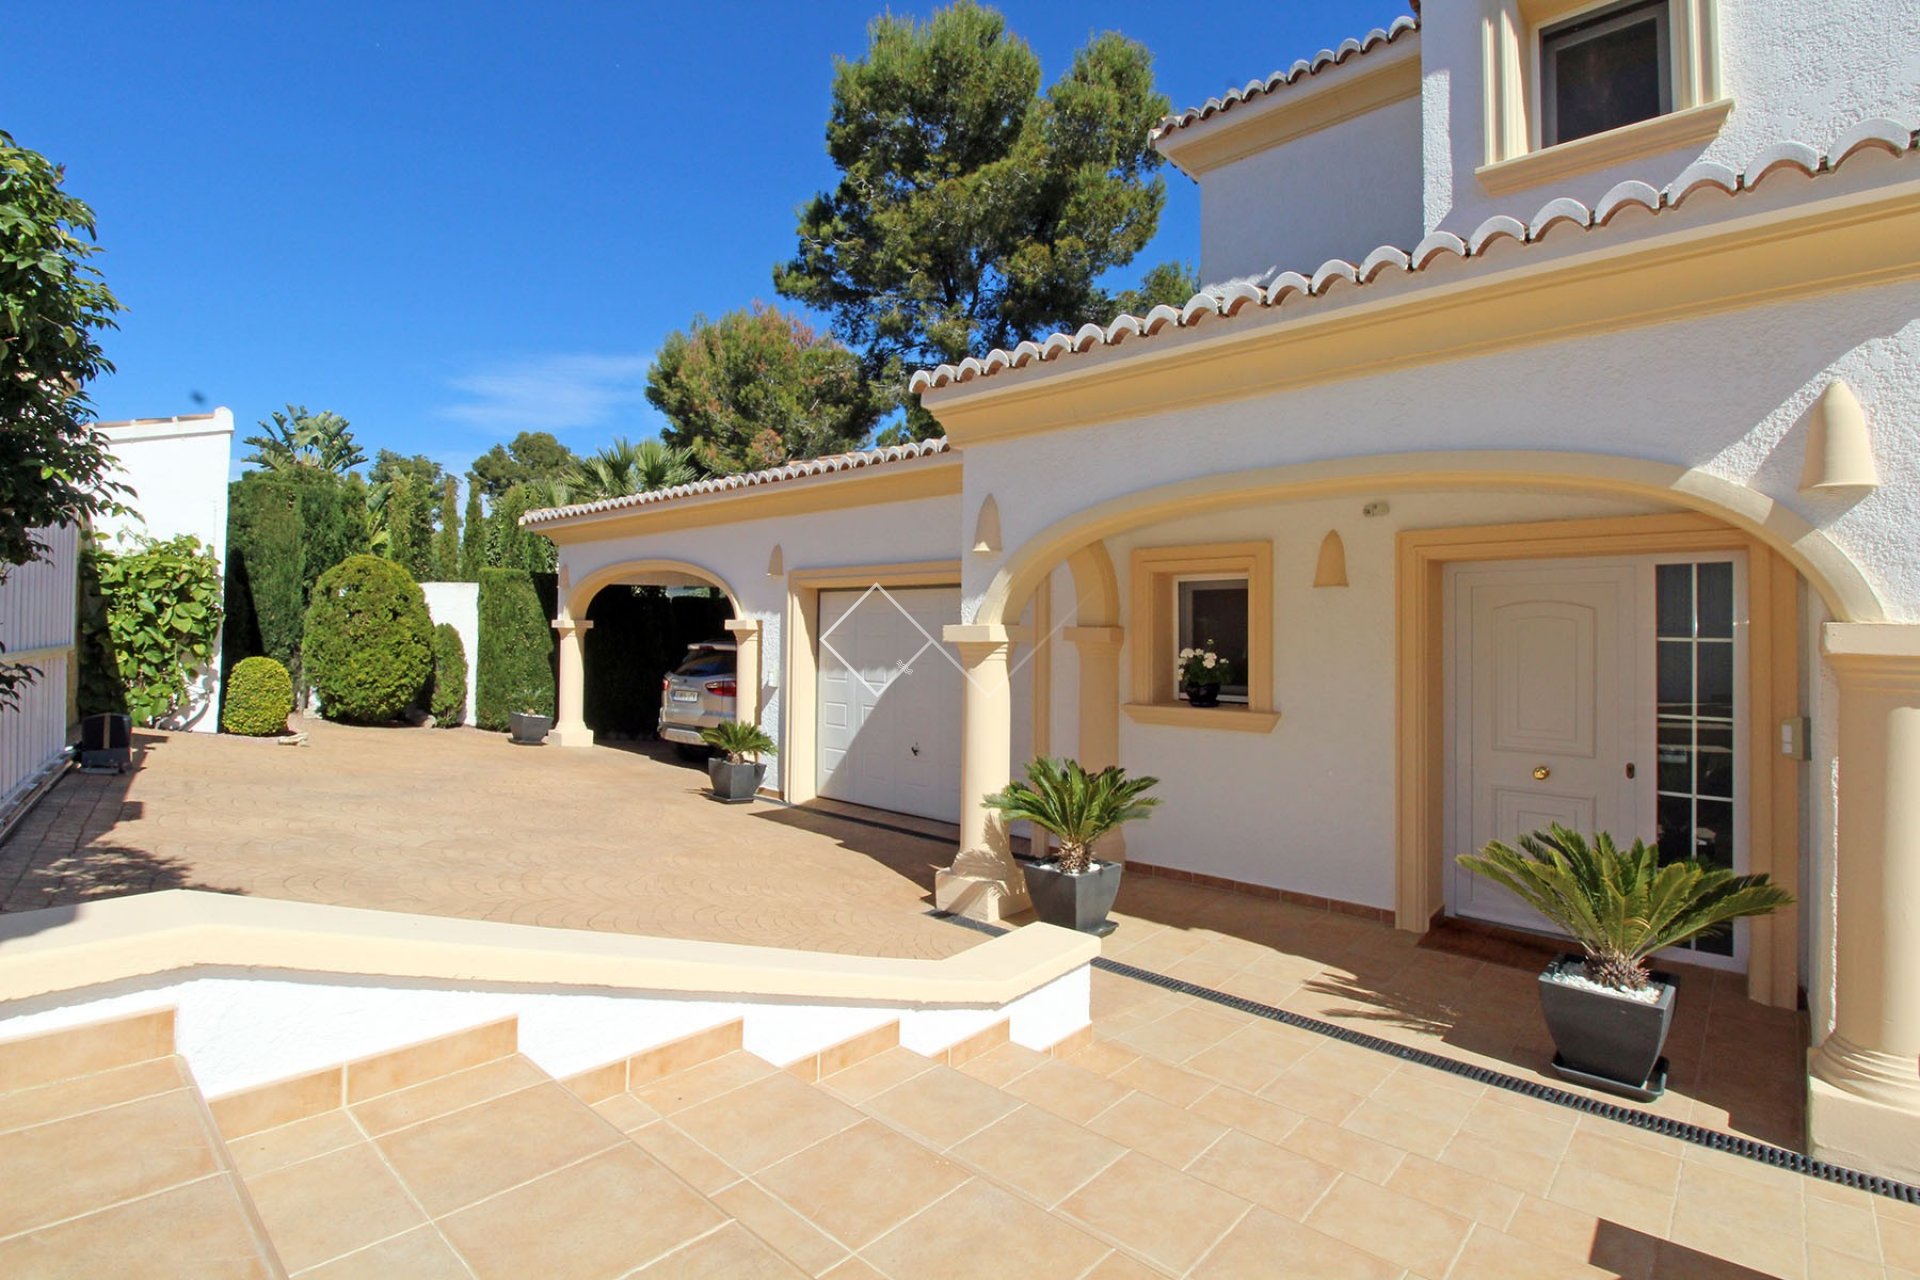 Mediterranean style villa, just a short walk away from the sandy beach of El Portet and Moraira center